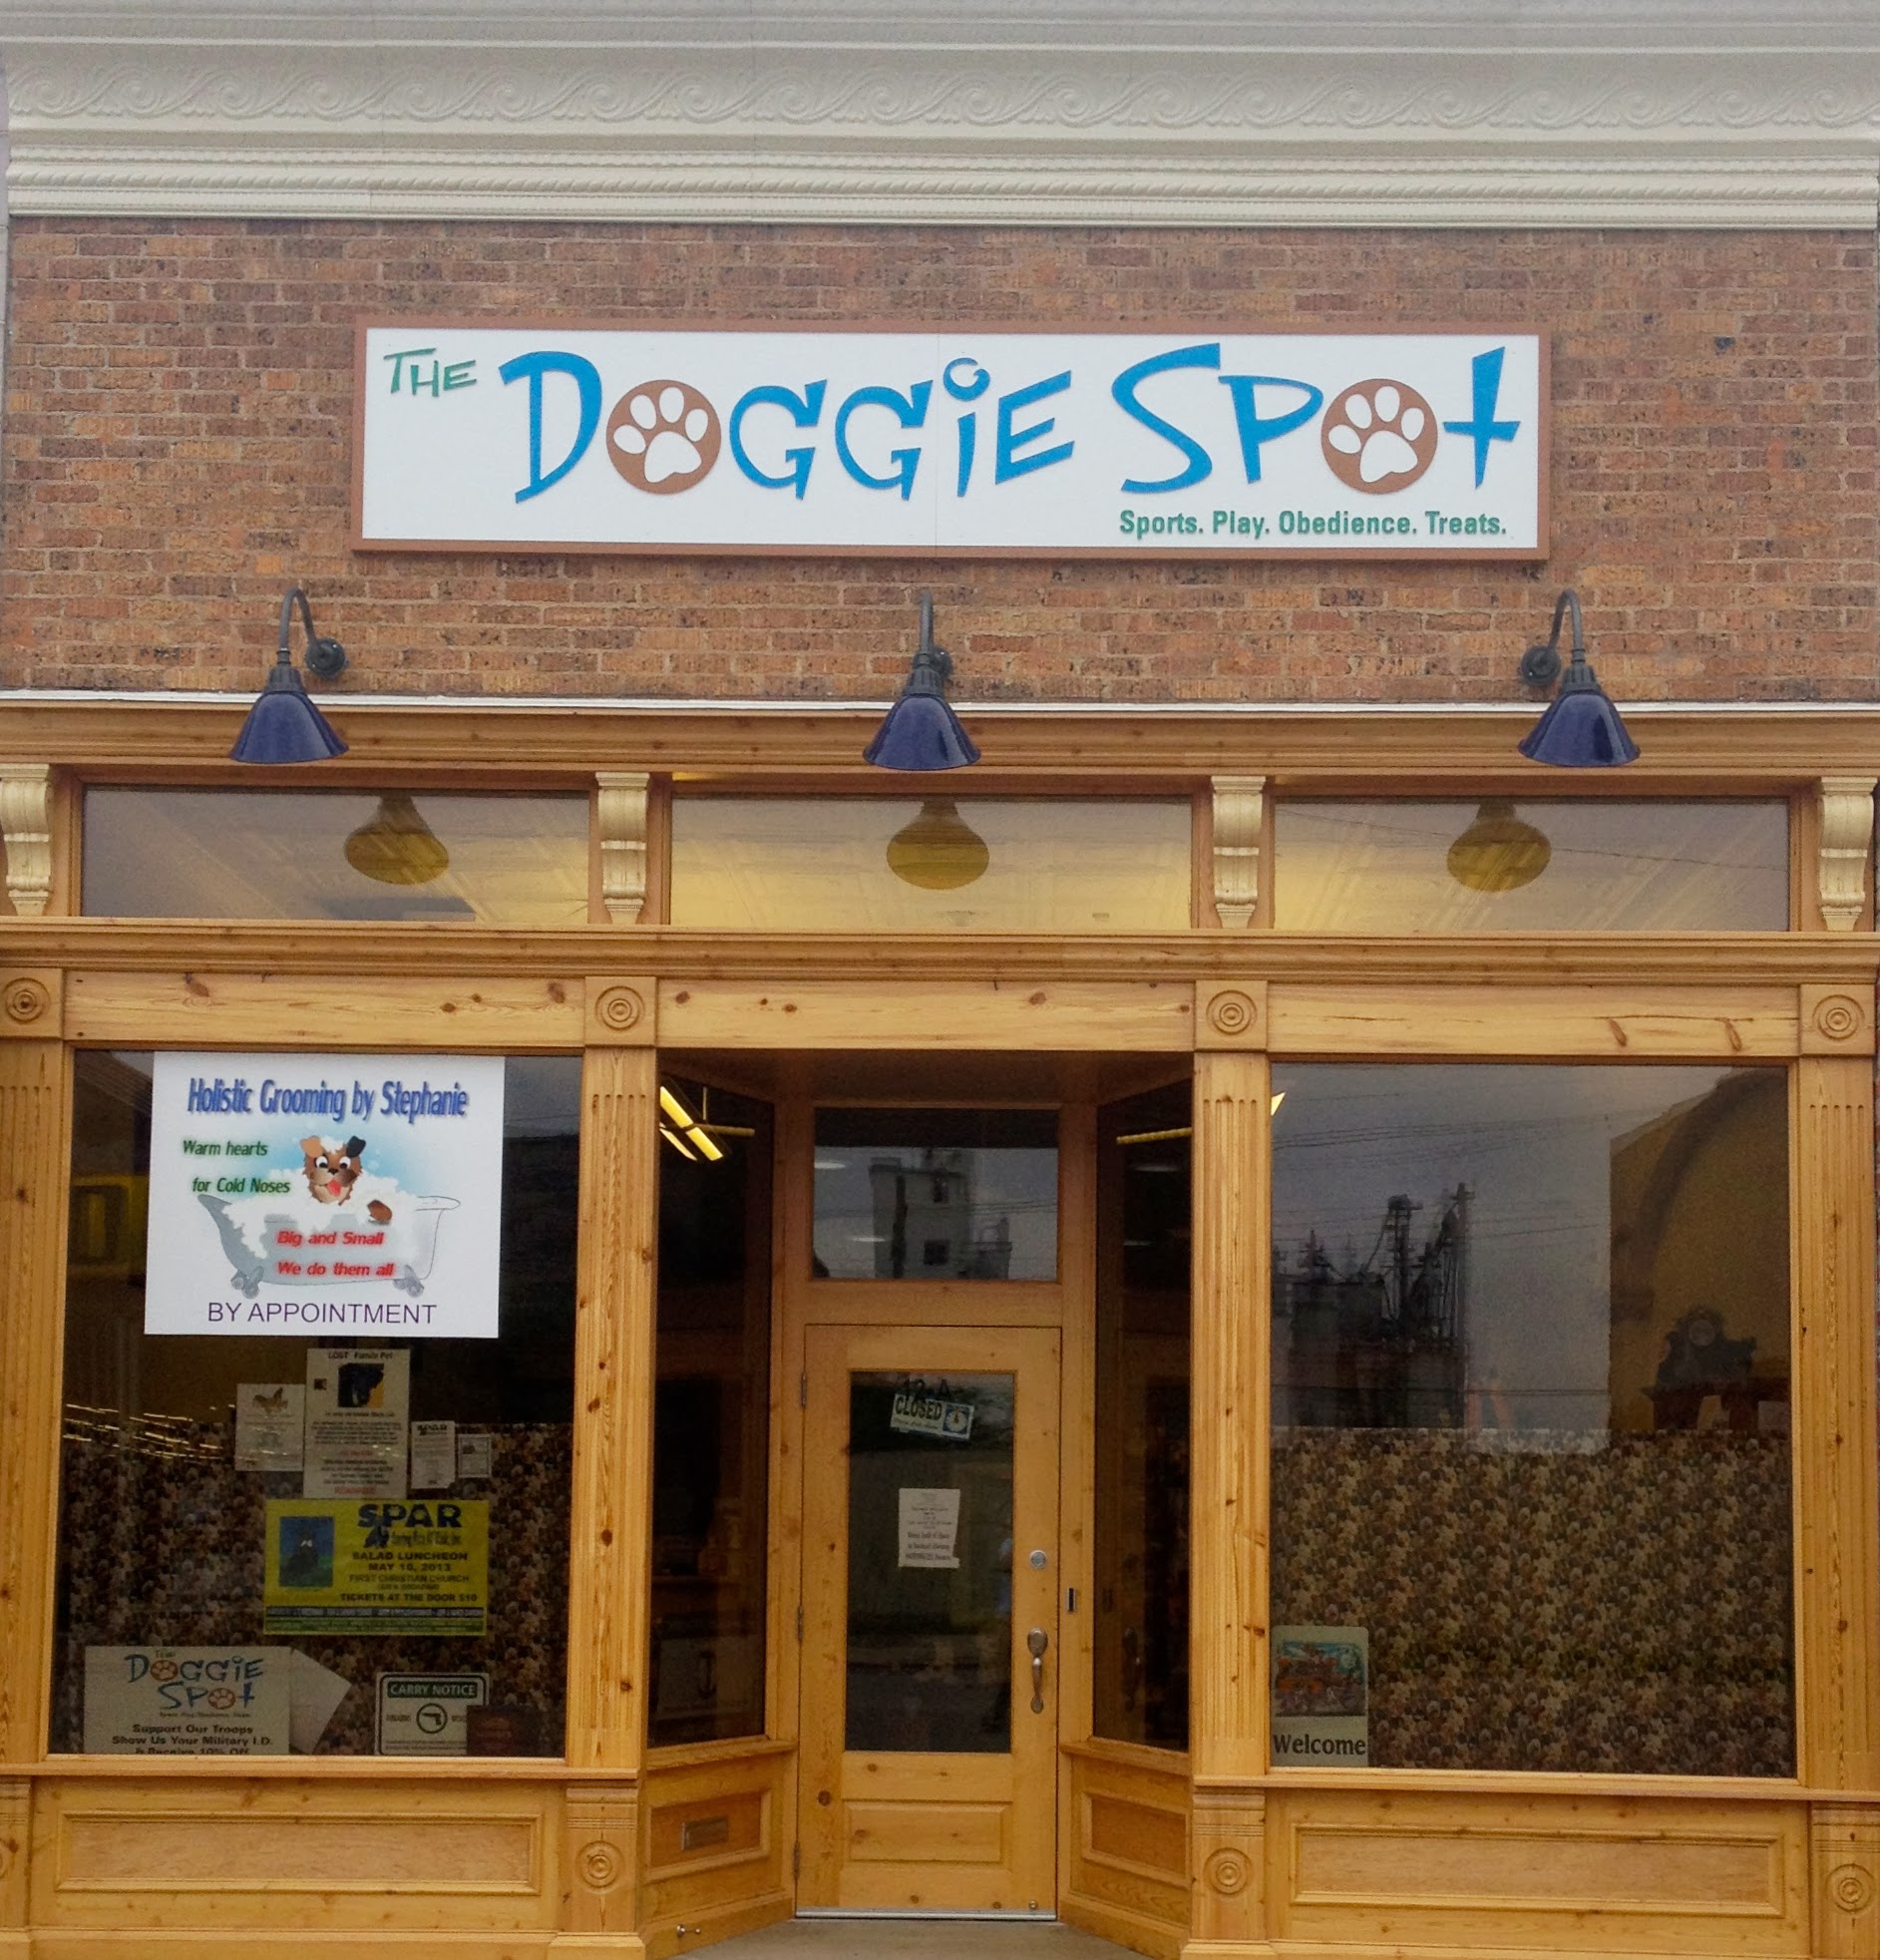 The Doggie Spot